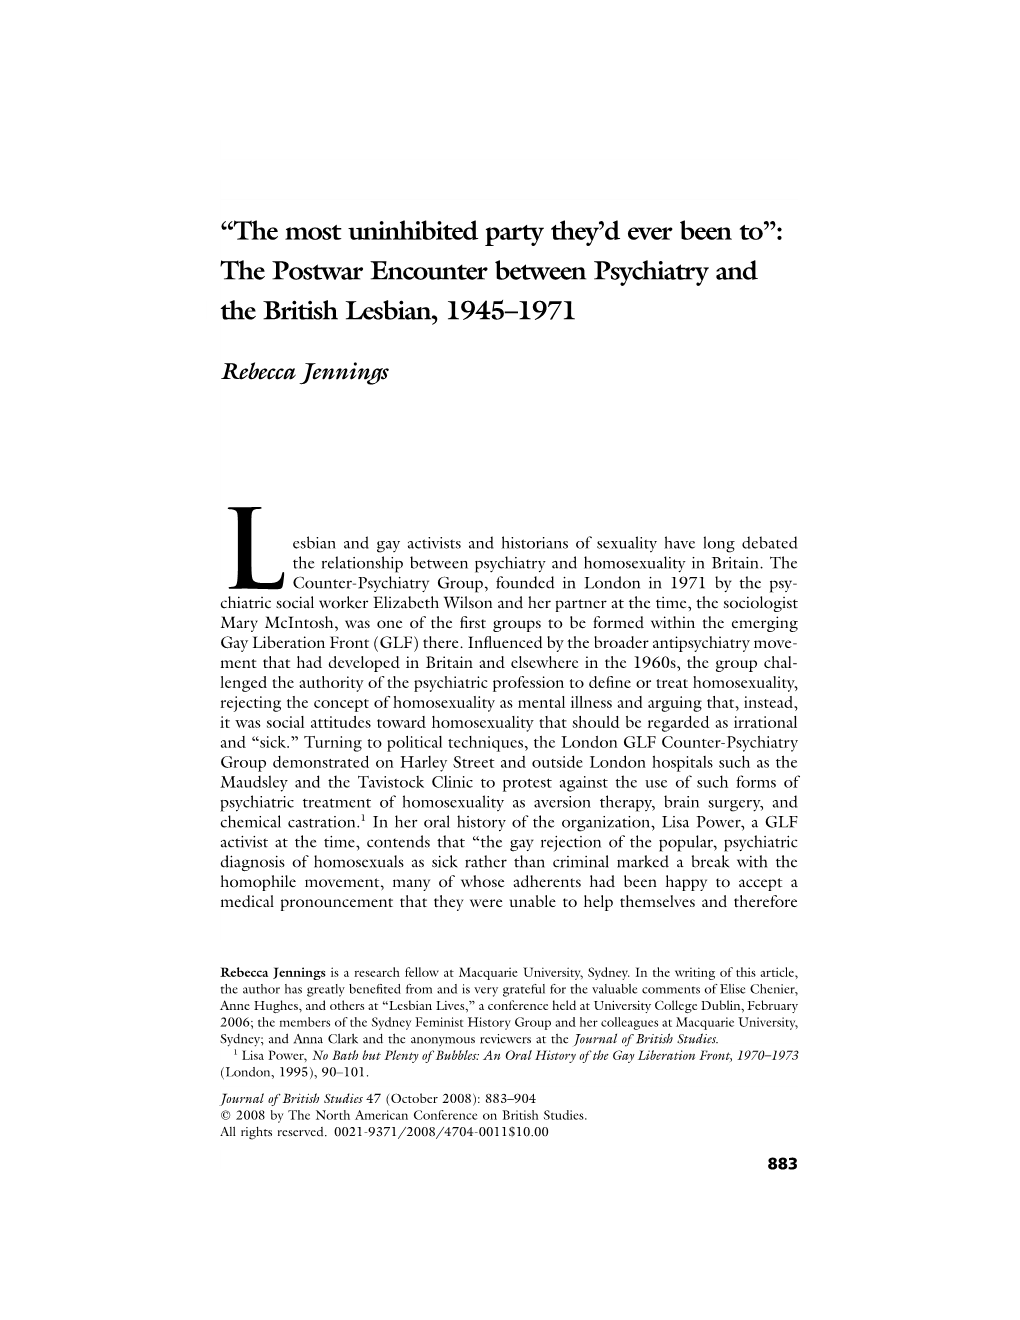 The Postwar Encounter Between Psychiatry and the British Lesbian, 1945–1971